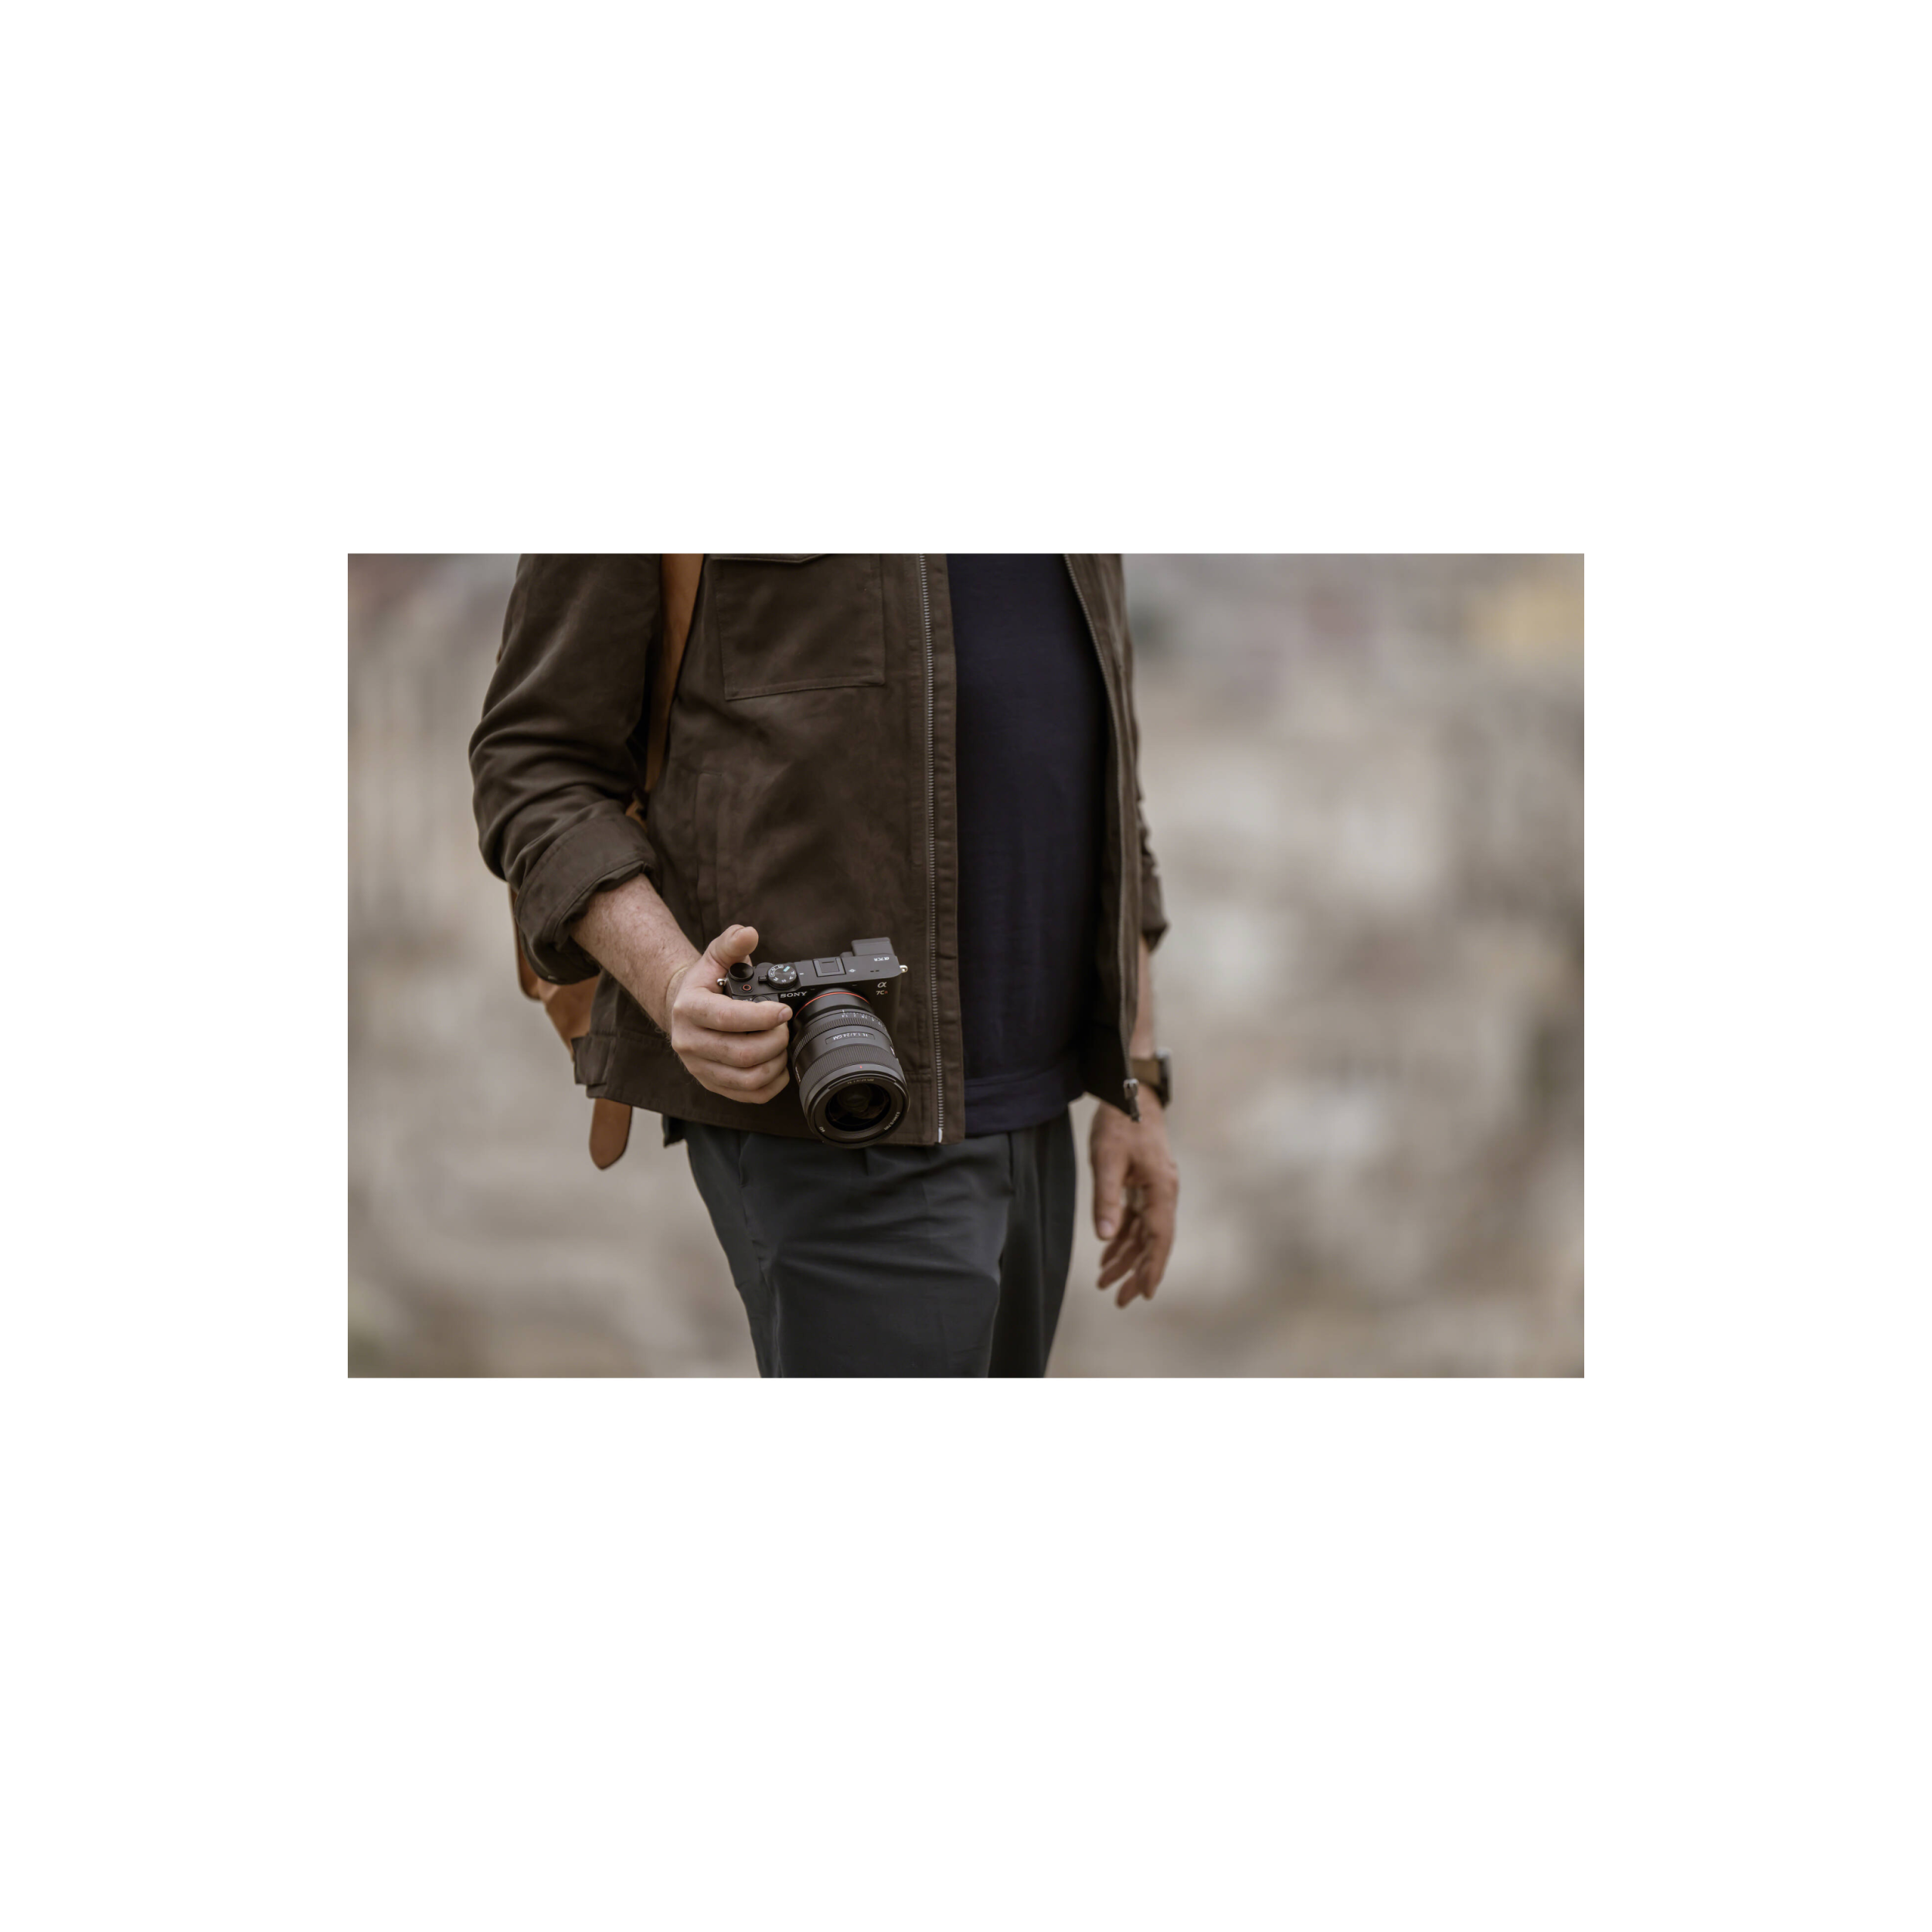 Sony A7cr Mirrorless Camera - Silver - Précommande à partir du 30 août